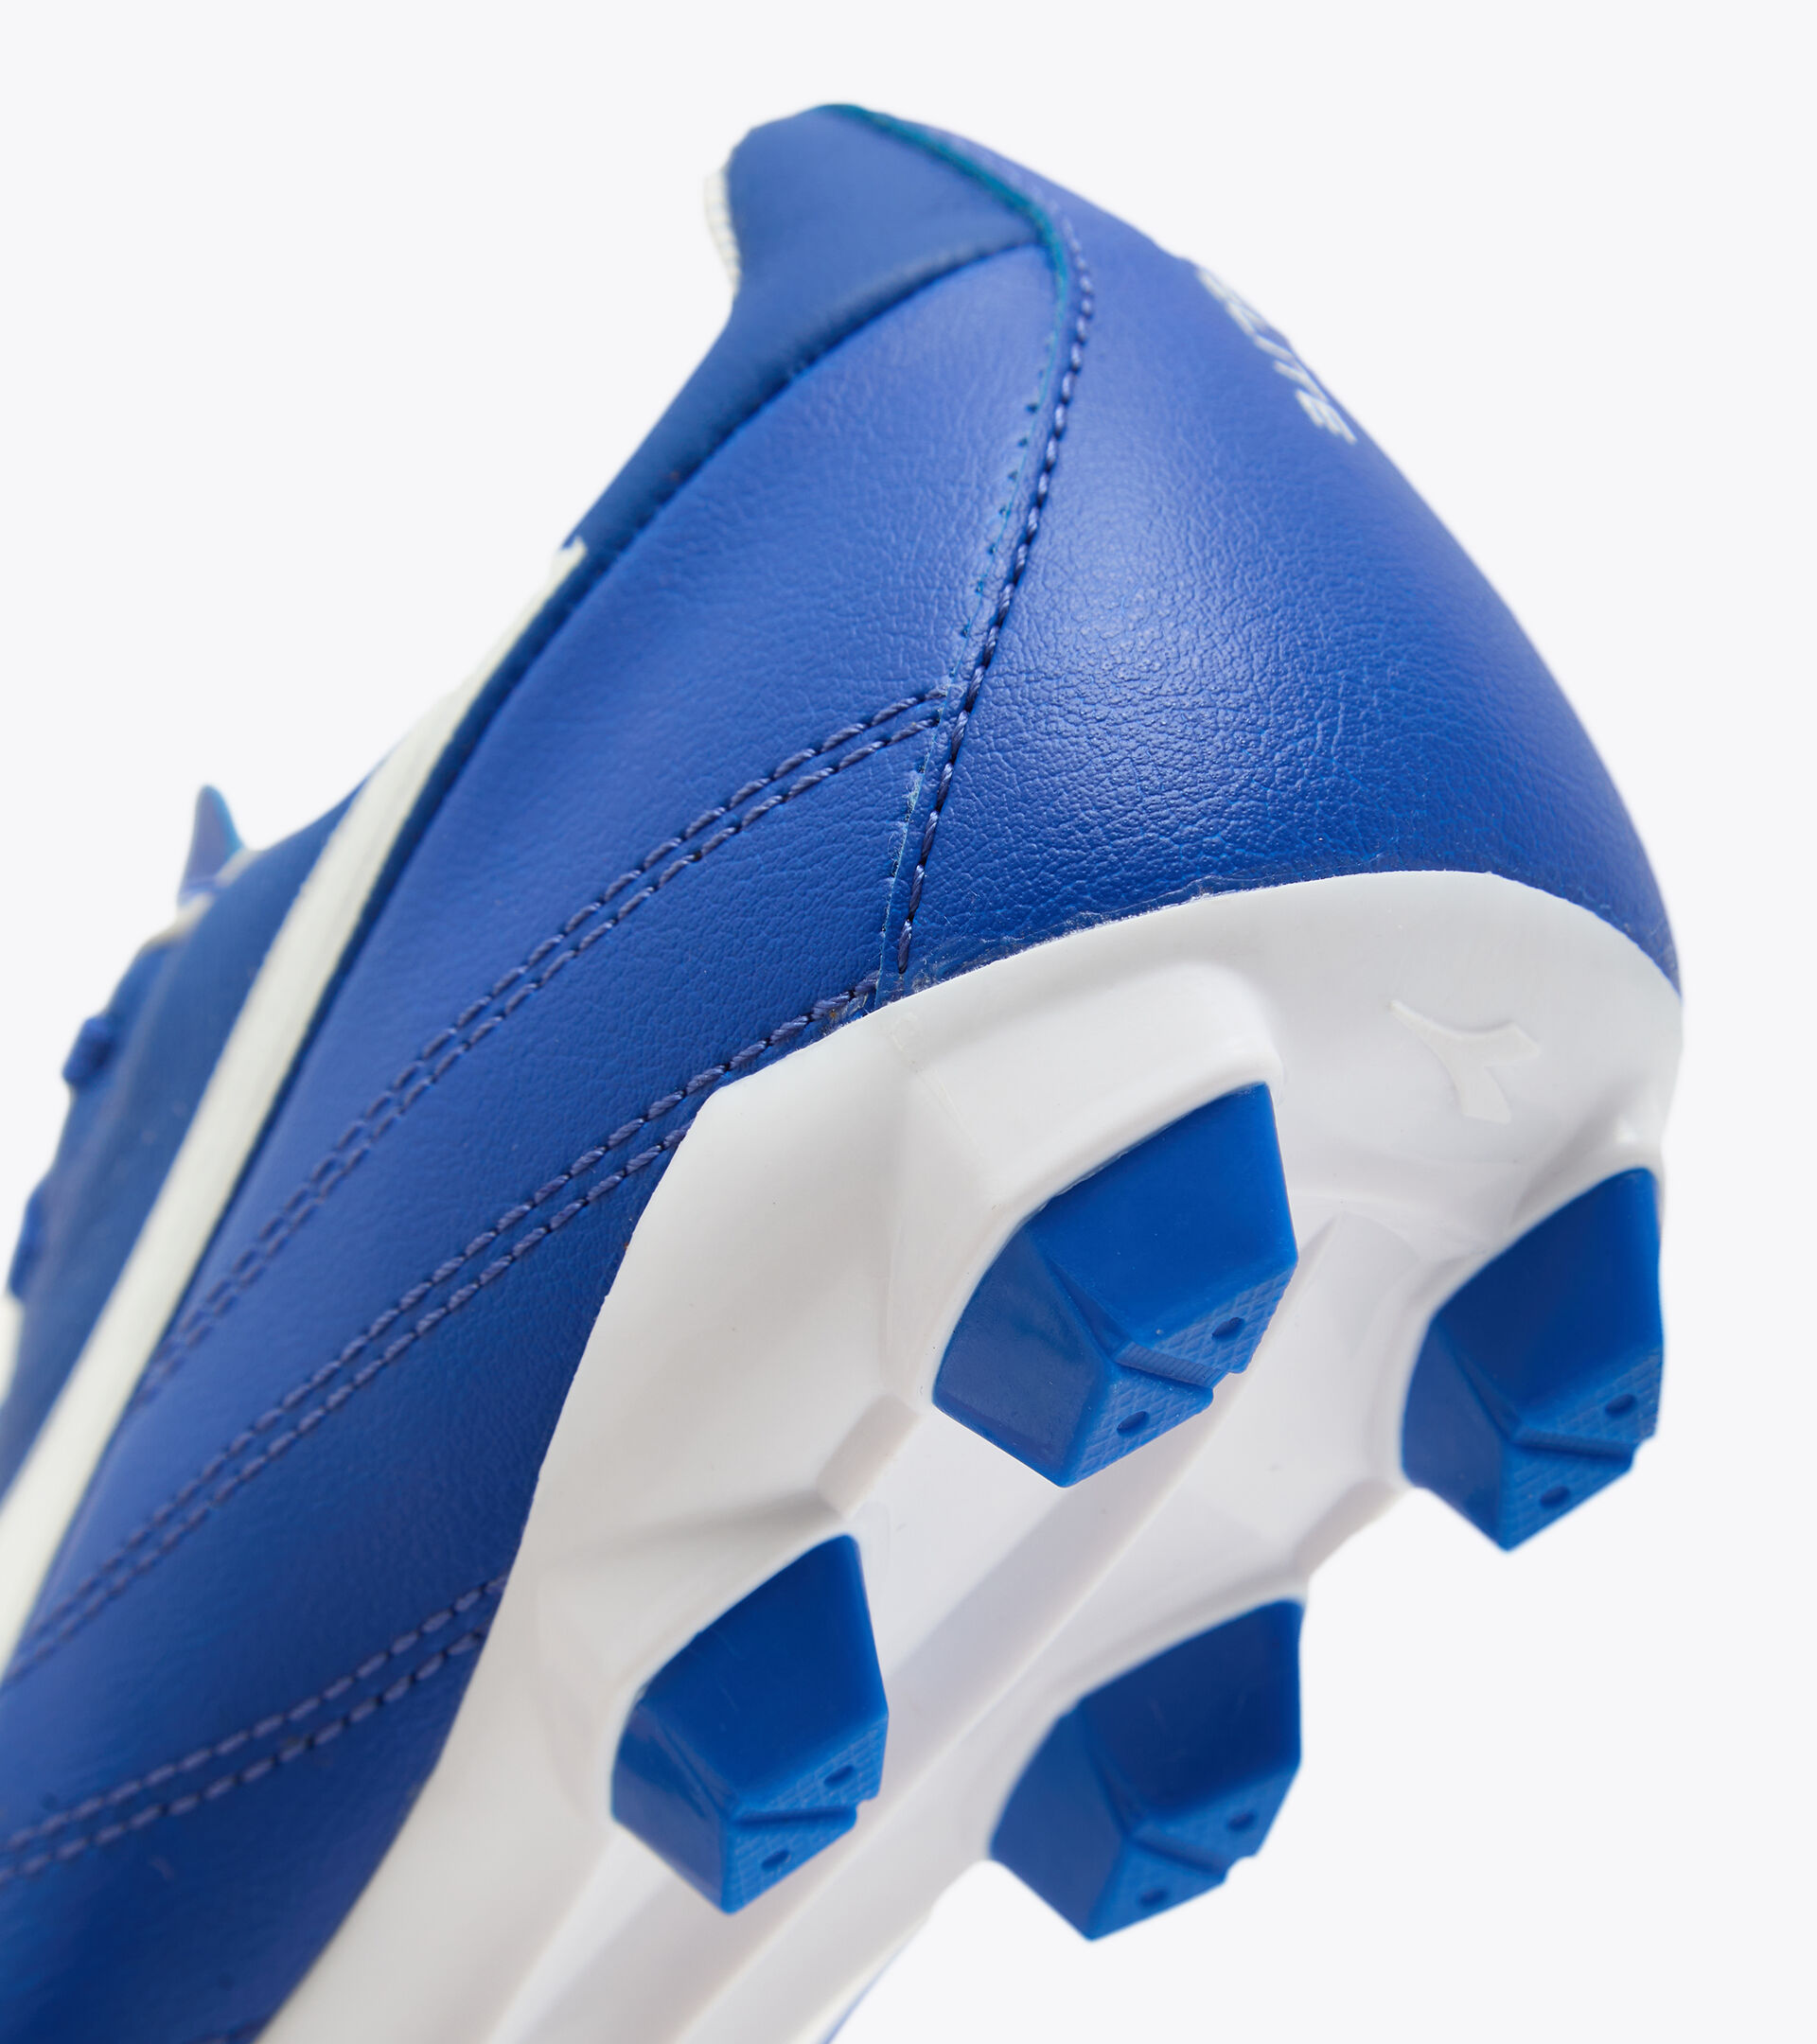 Football boots - Junior BRASIL ELITE 2 LT LPU Y ROYAL BLUE/OPTICAL WHITE - Diadora